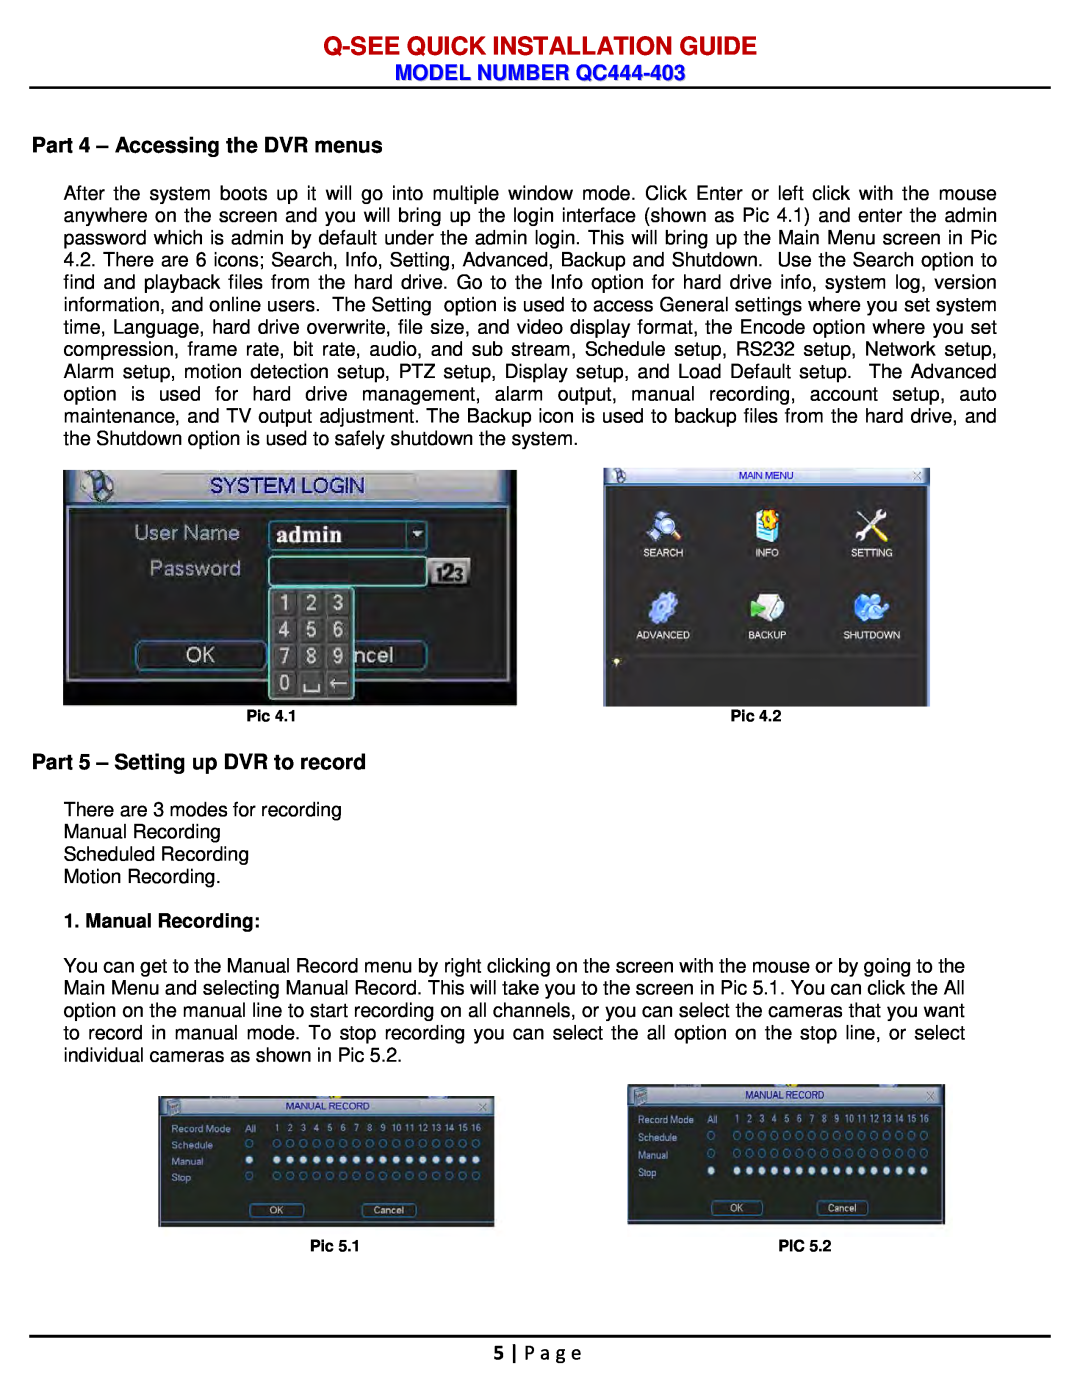 Q-See QC444-403 manual Part 4 - Accessing the DVR menus, Part 5 - Setting up DVR to record, P a g e, Manual Recording 